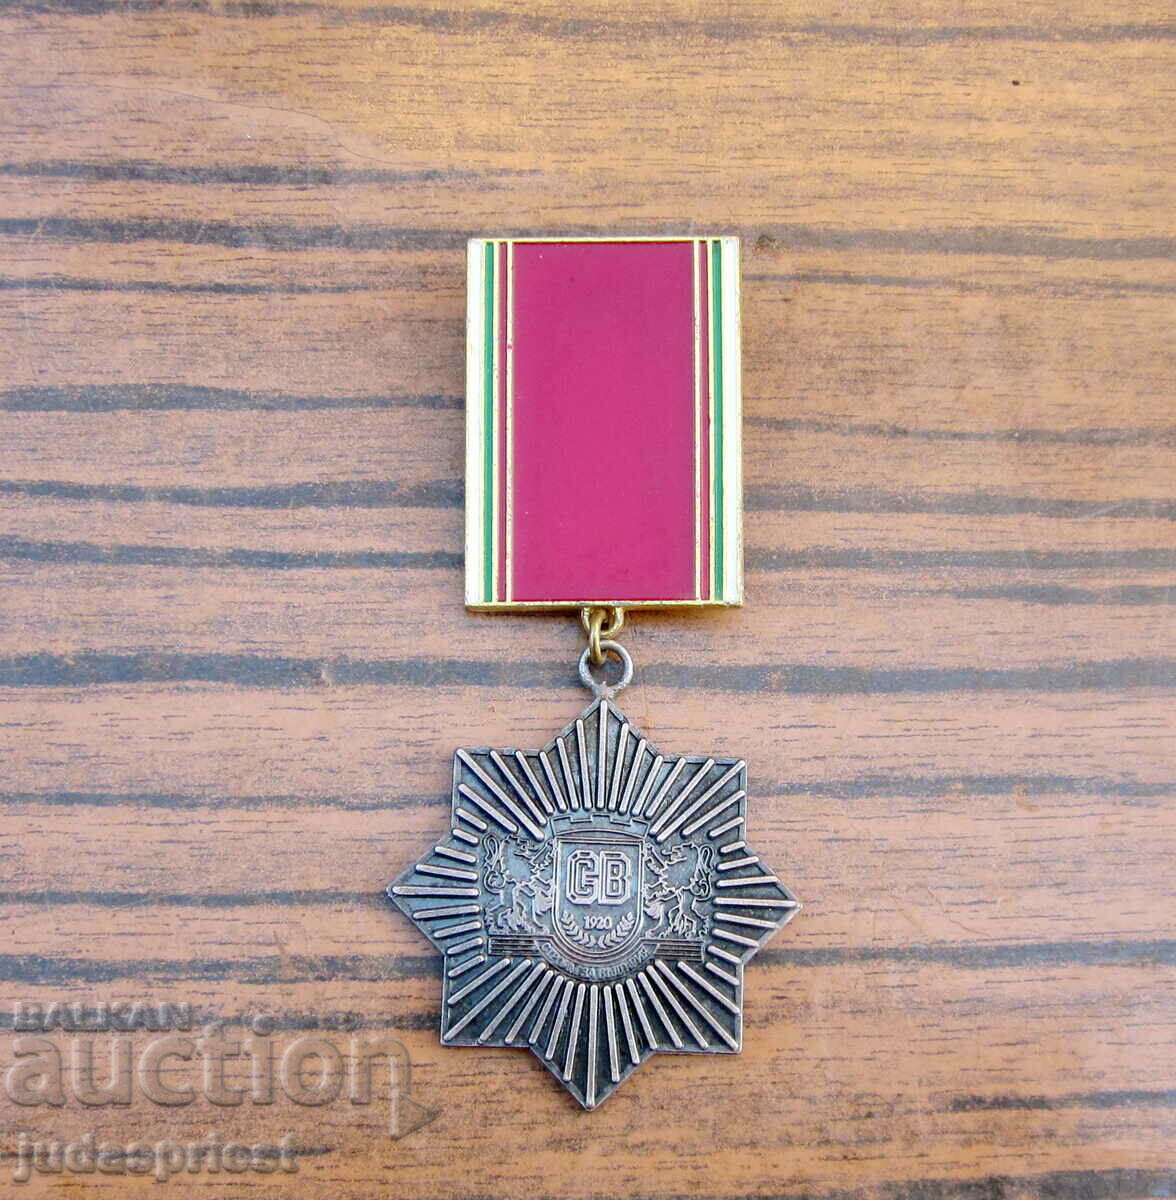 Bulgarian military medal SV for merit construction troops